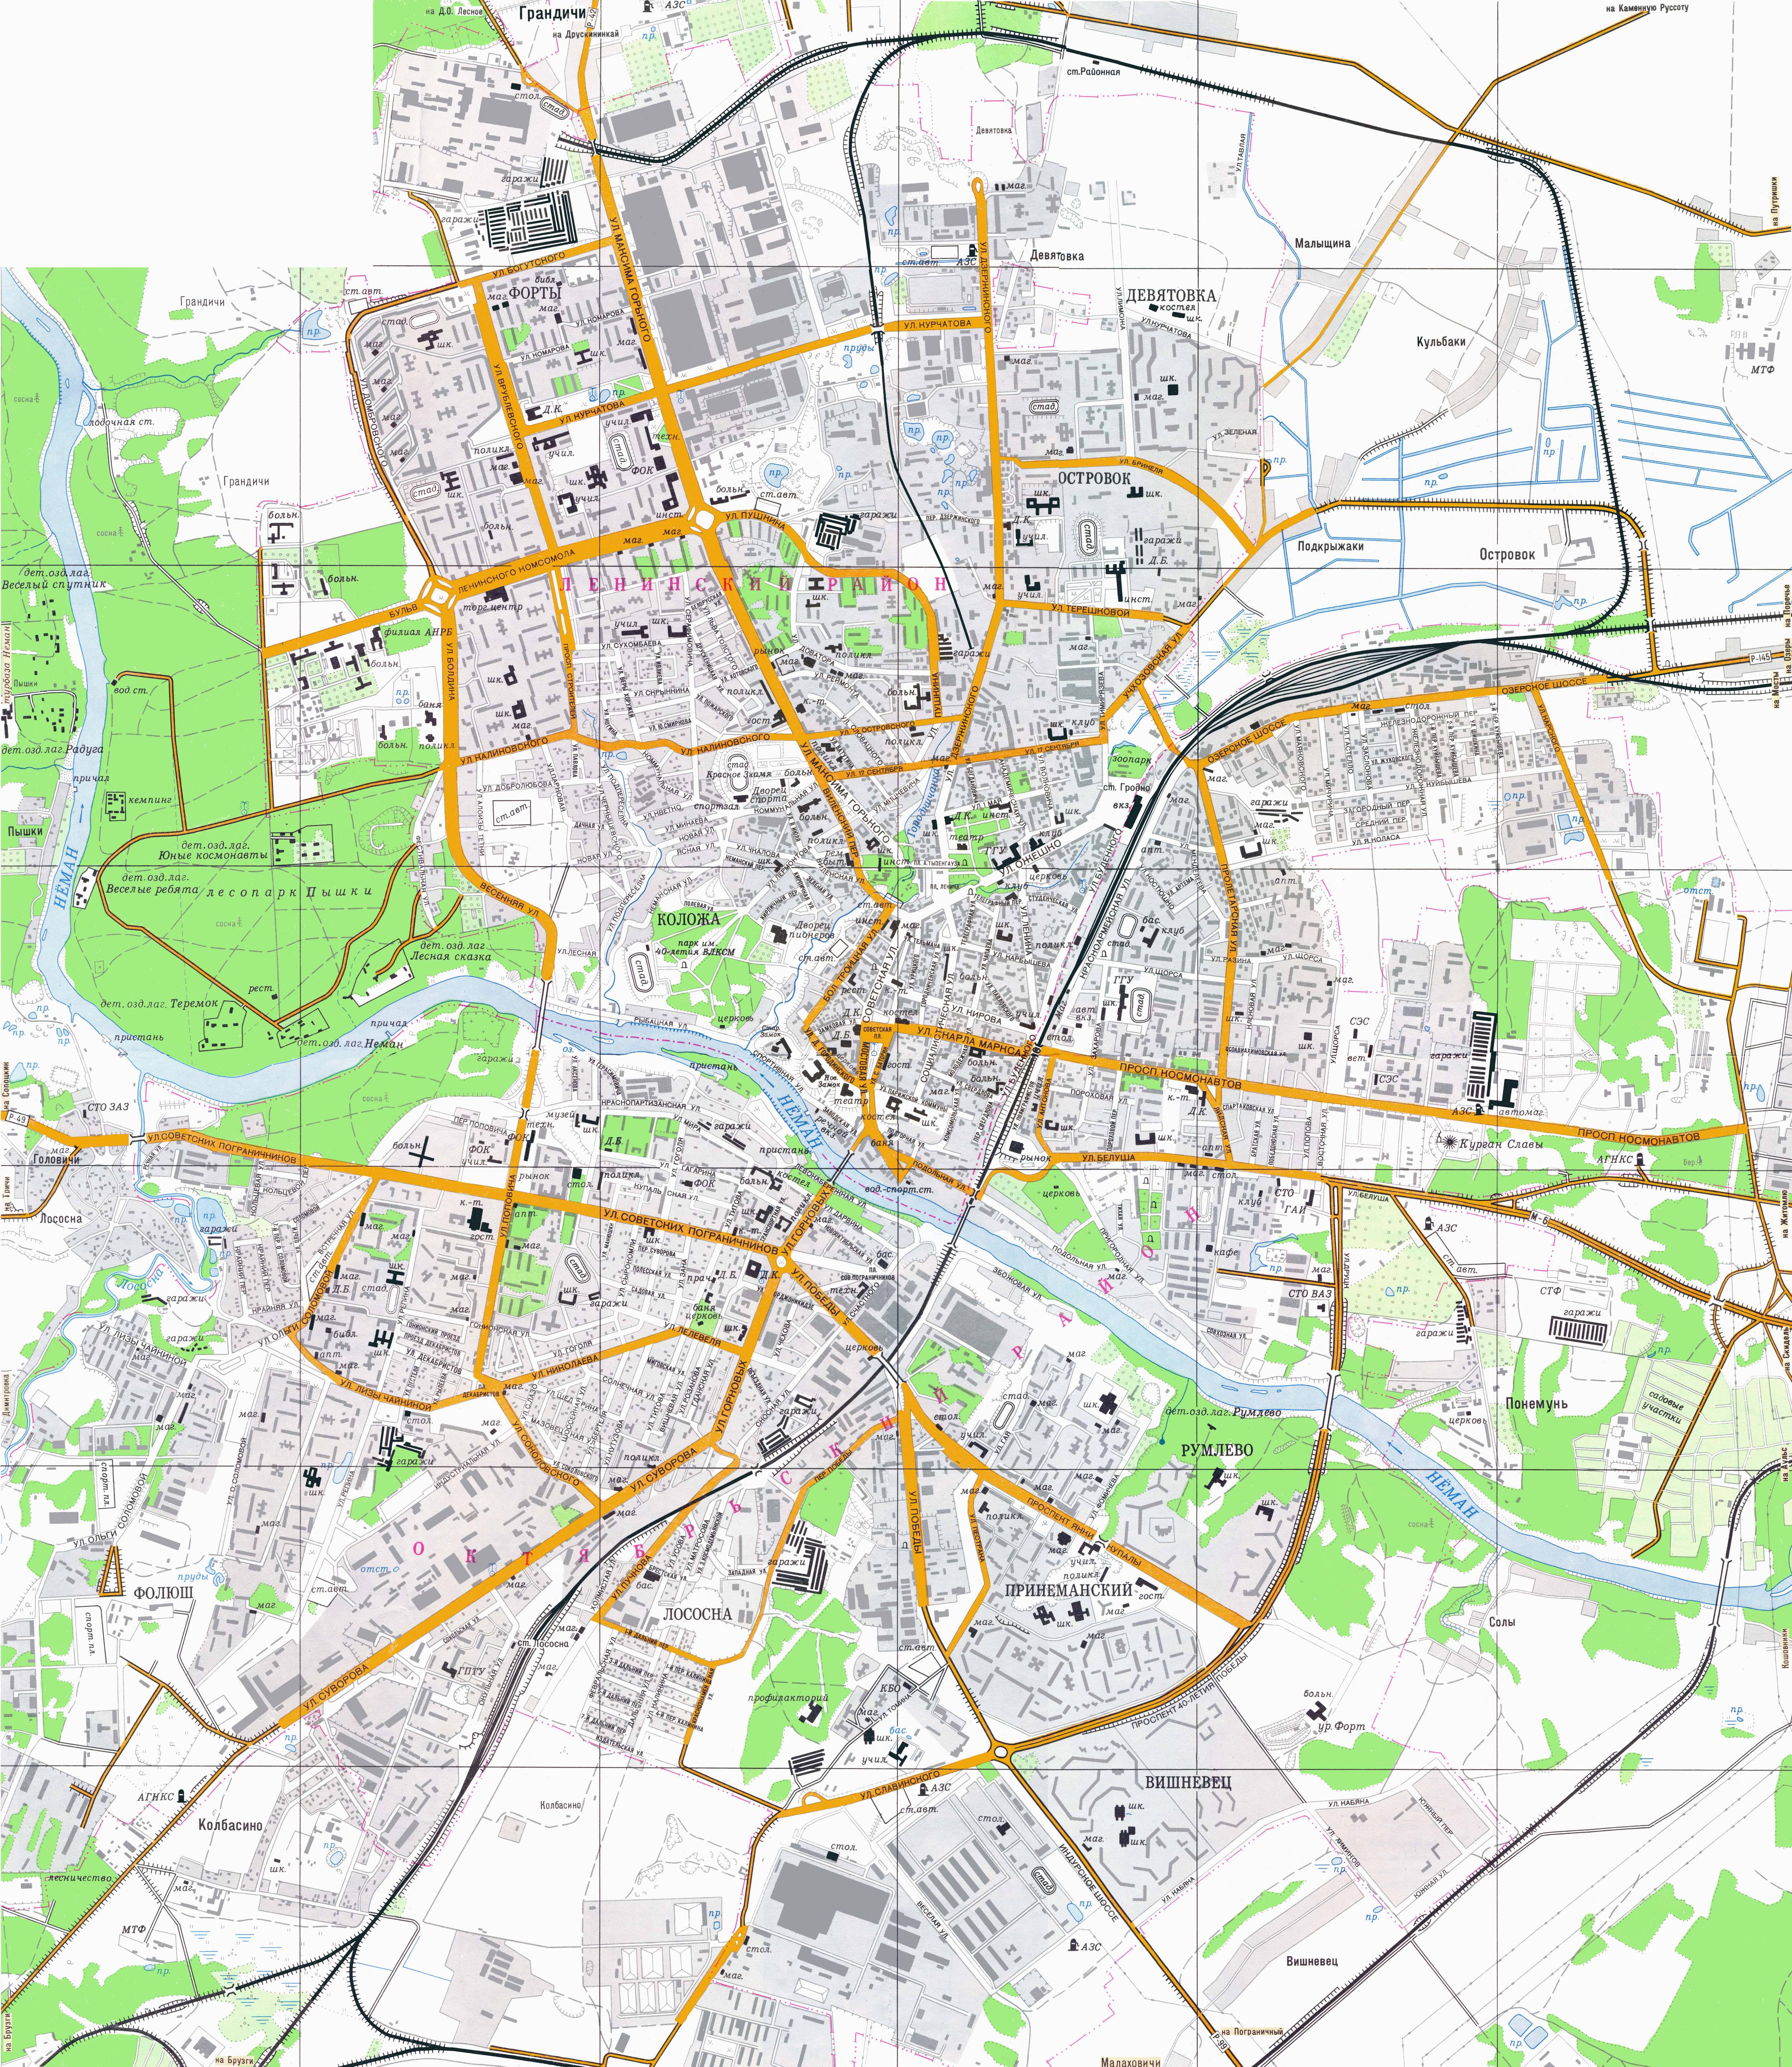 Местоположение гродно. Город Гродно на карте. Центр Гродно на карте. Карта города Гродно подробная. Карта Гродно с улицами подробная.